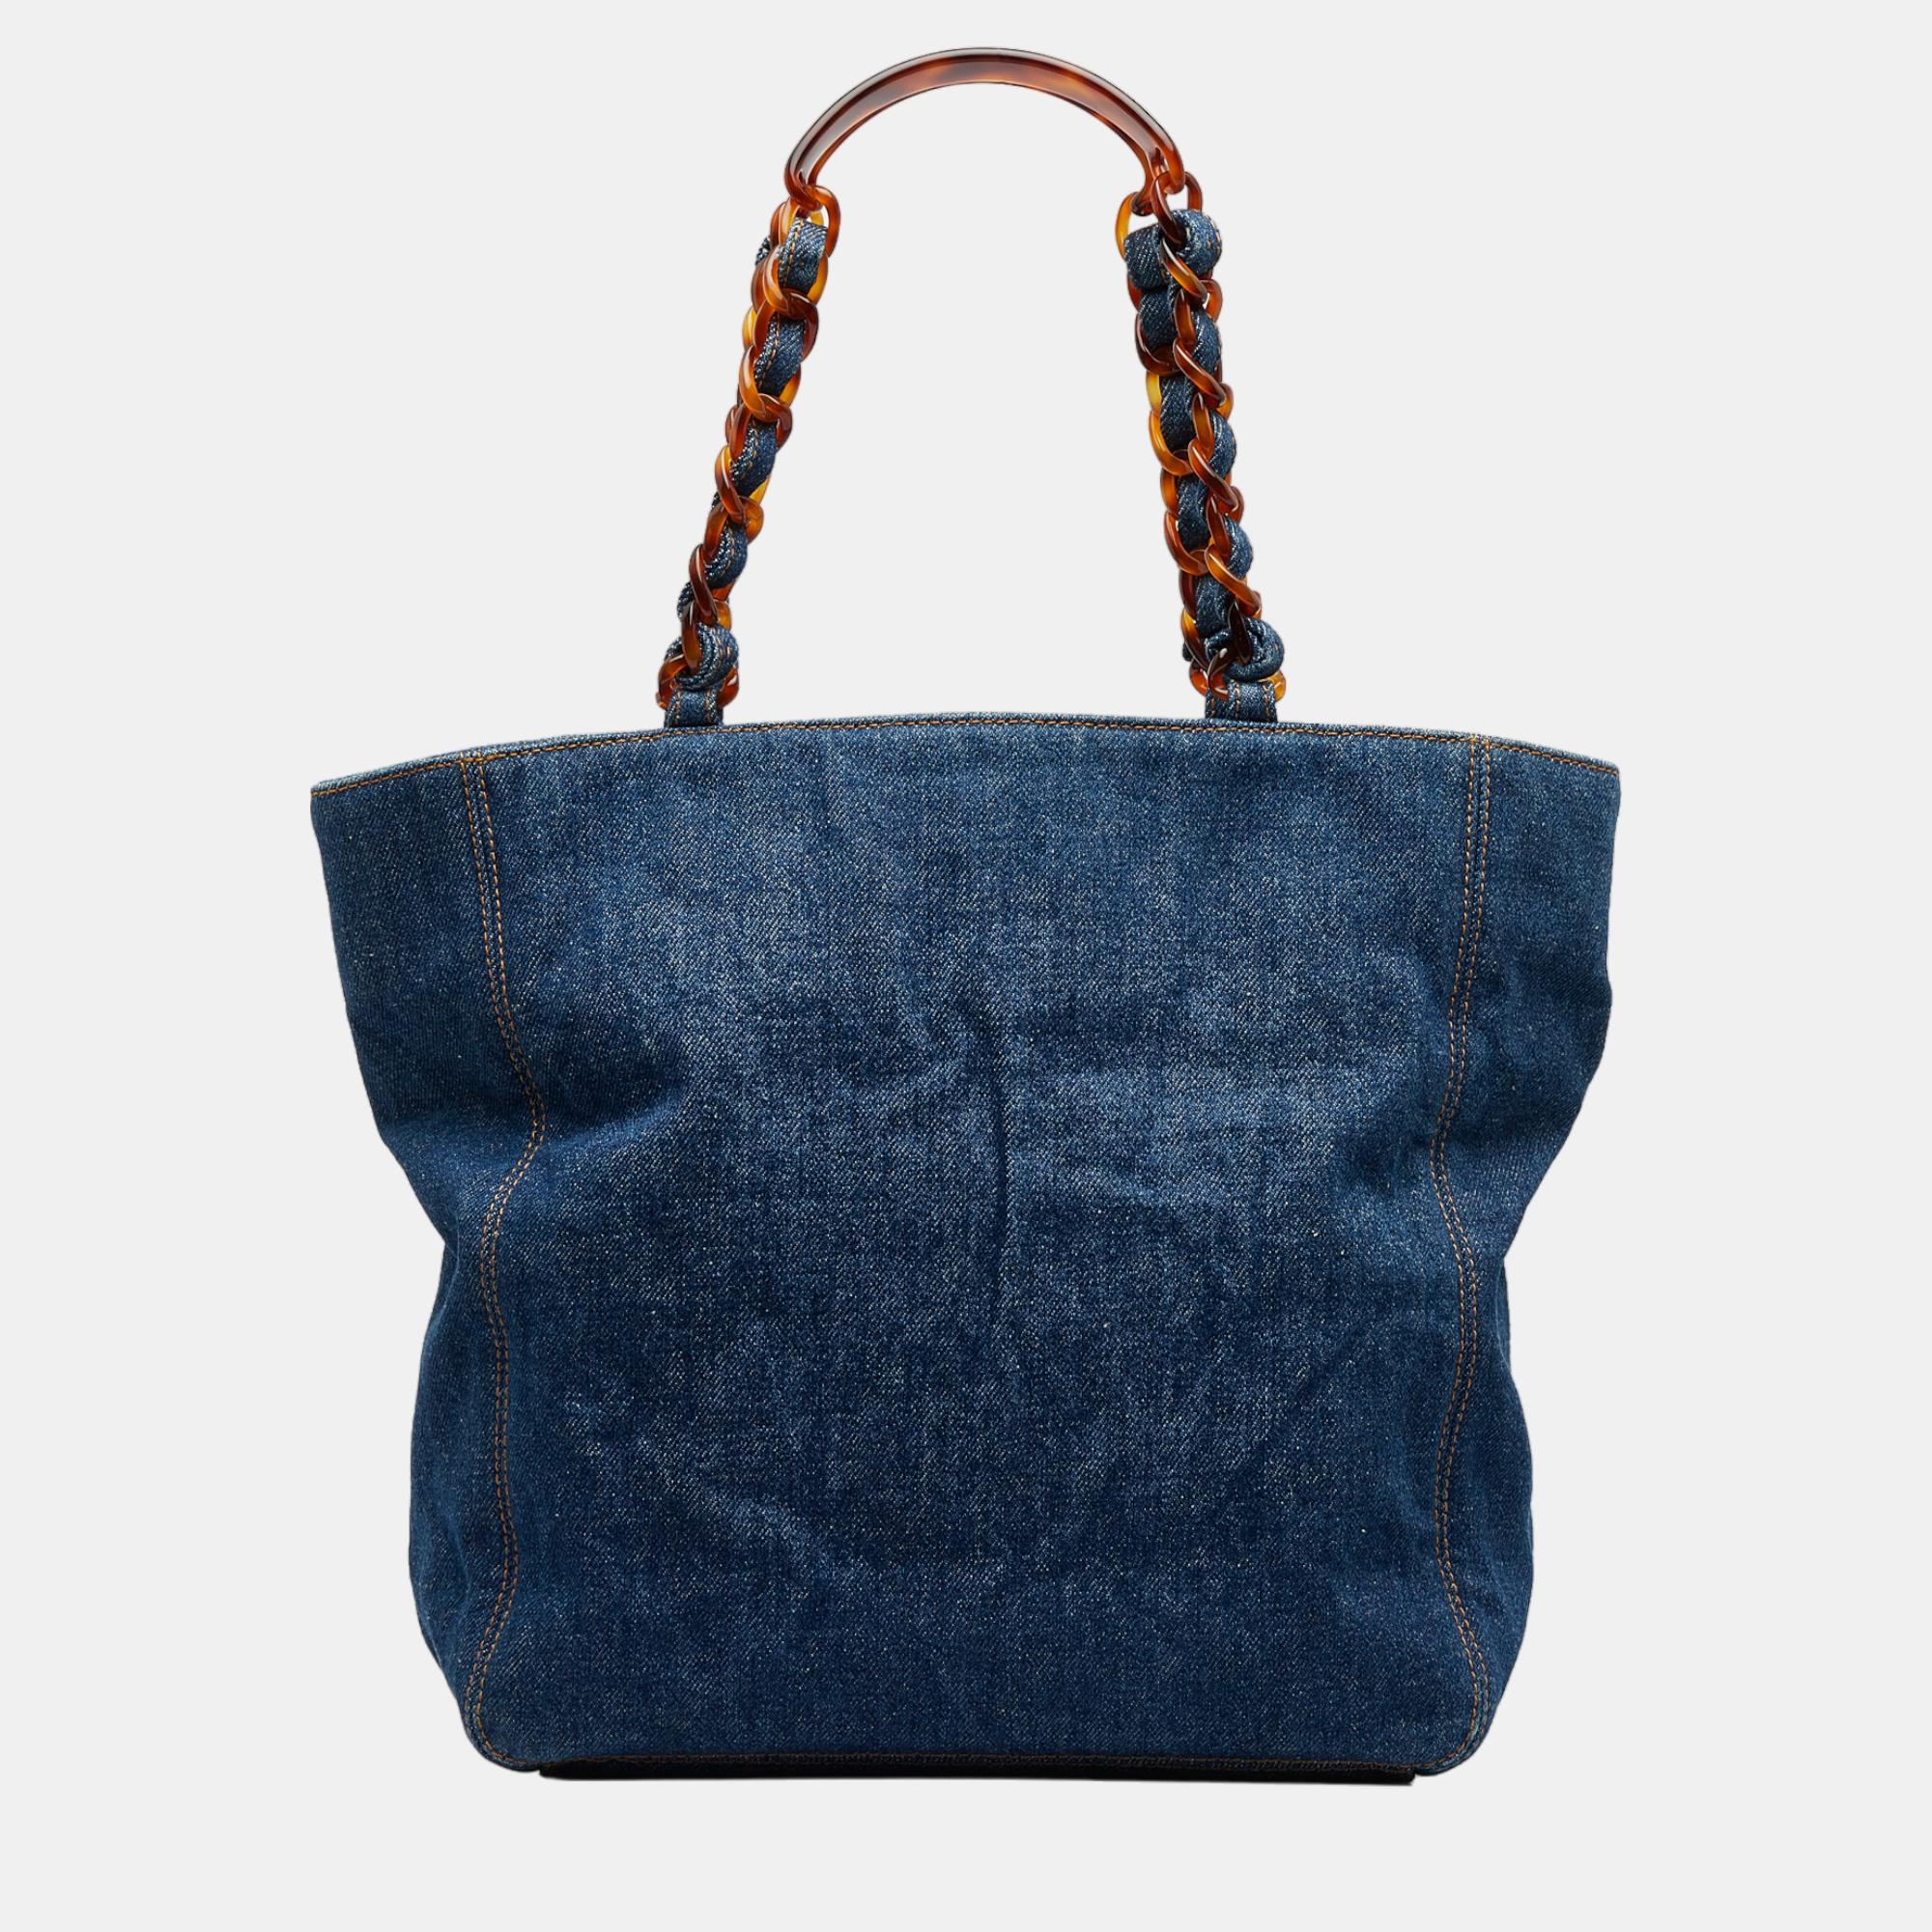 Chanel Blue CC Denim Tote Bag